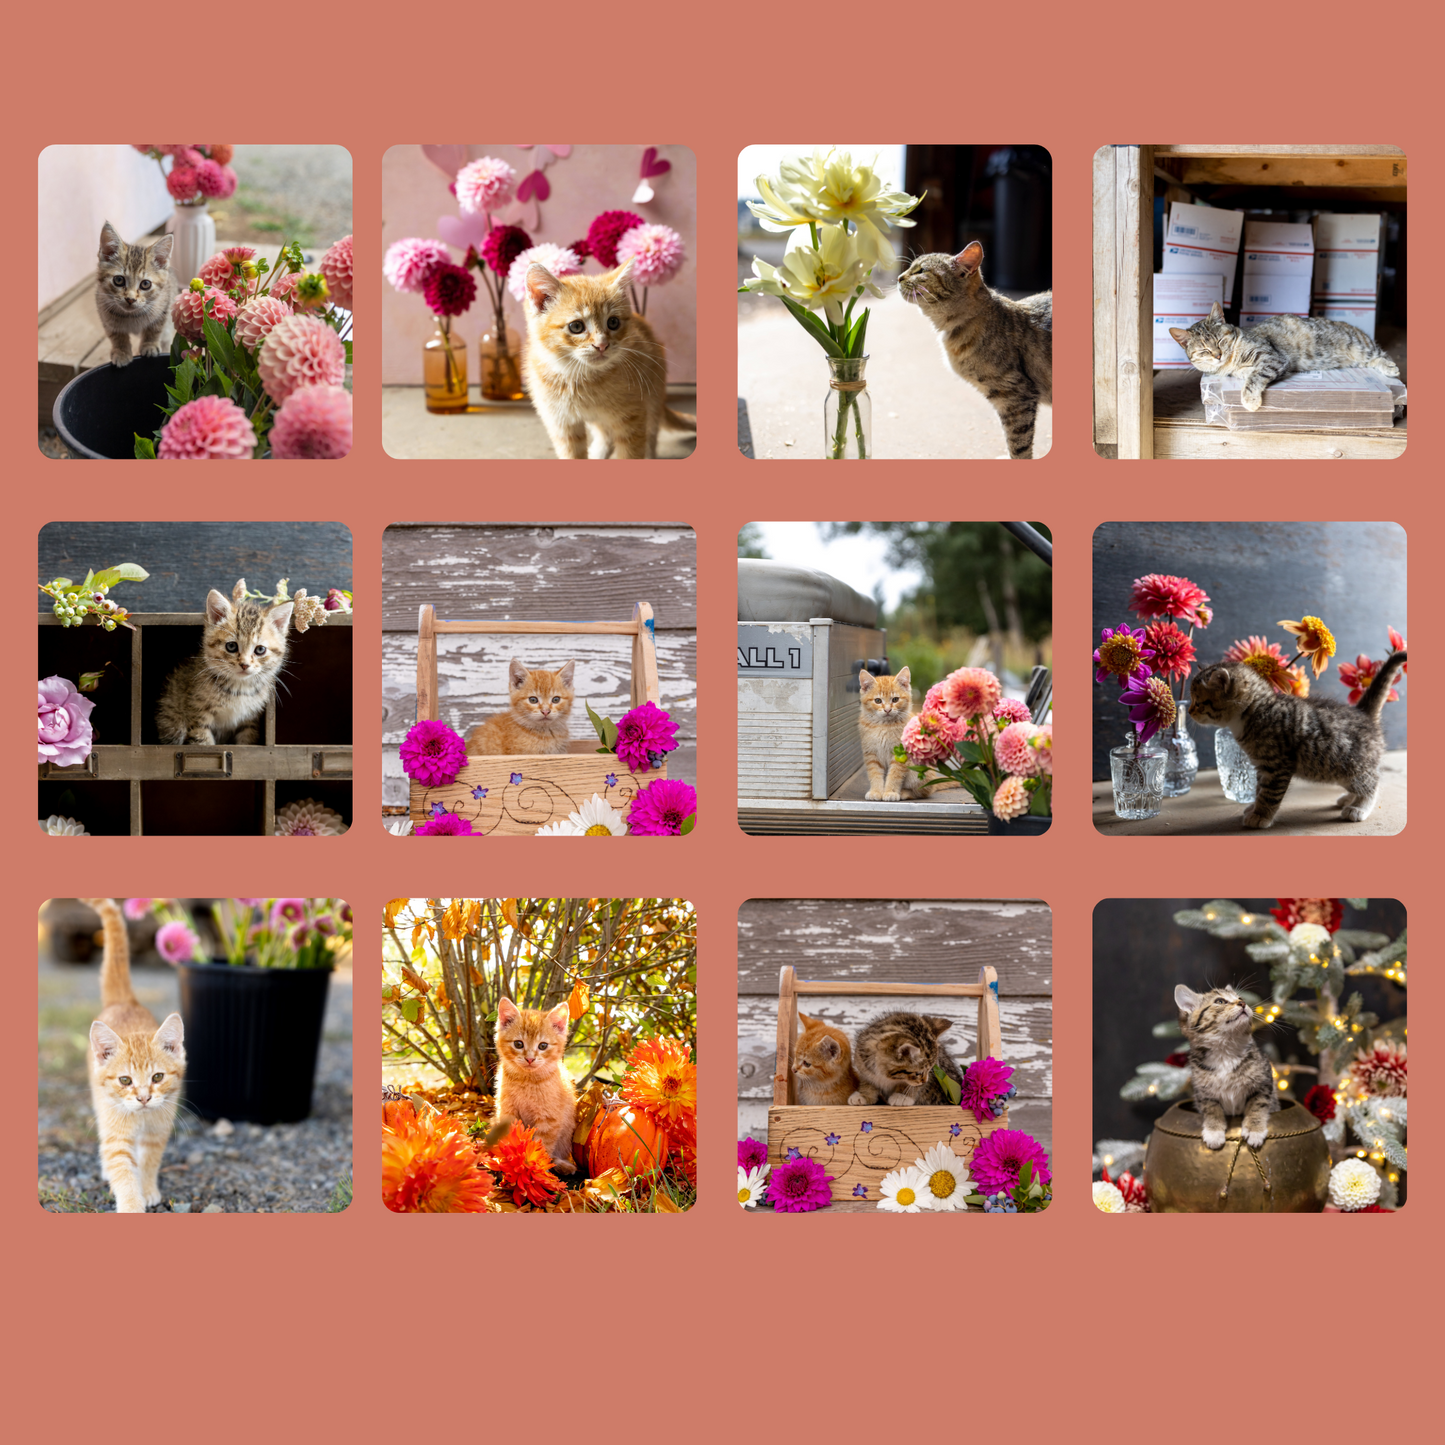 Dahlia Cats of Triple Wren Farms 2024 Wall Calendar (Free Shipping!)